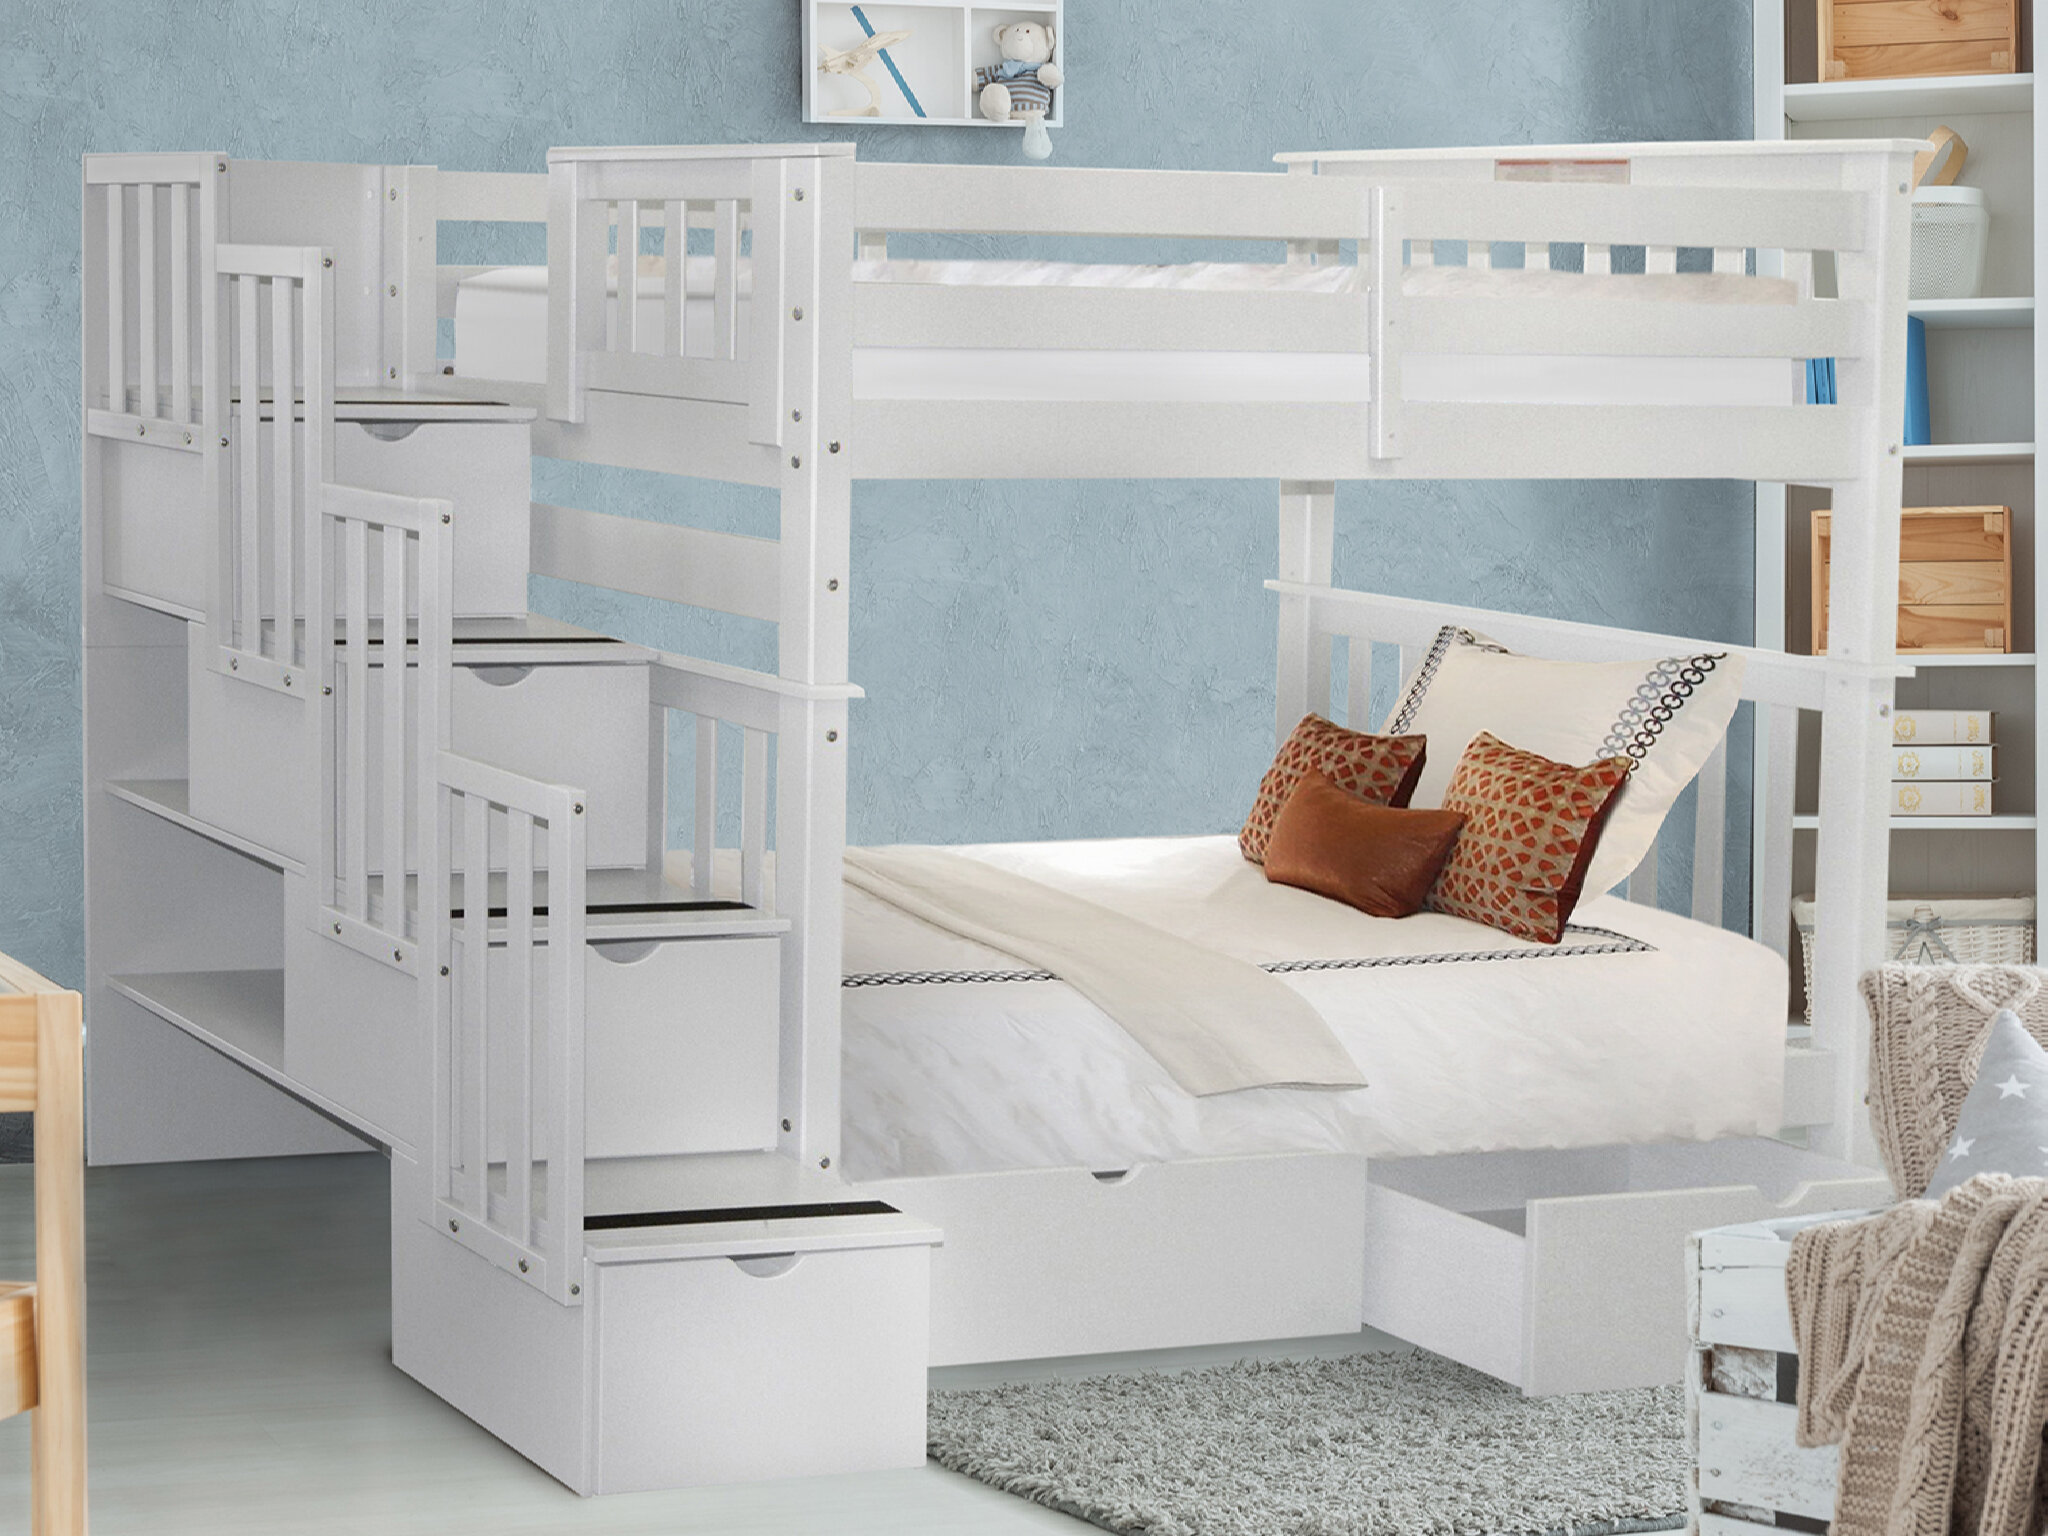 6 bed bunk bed